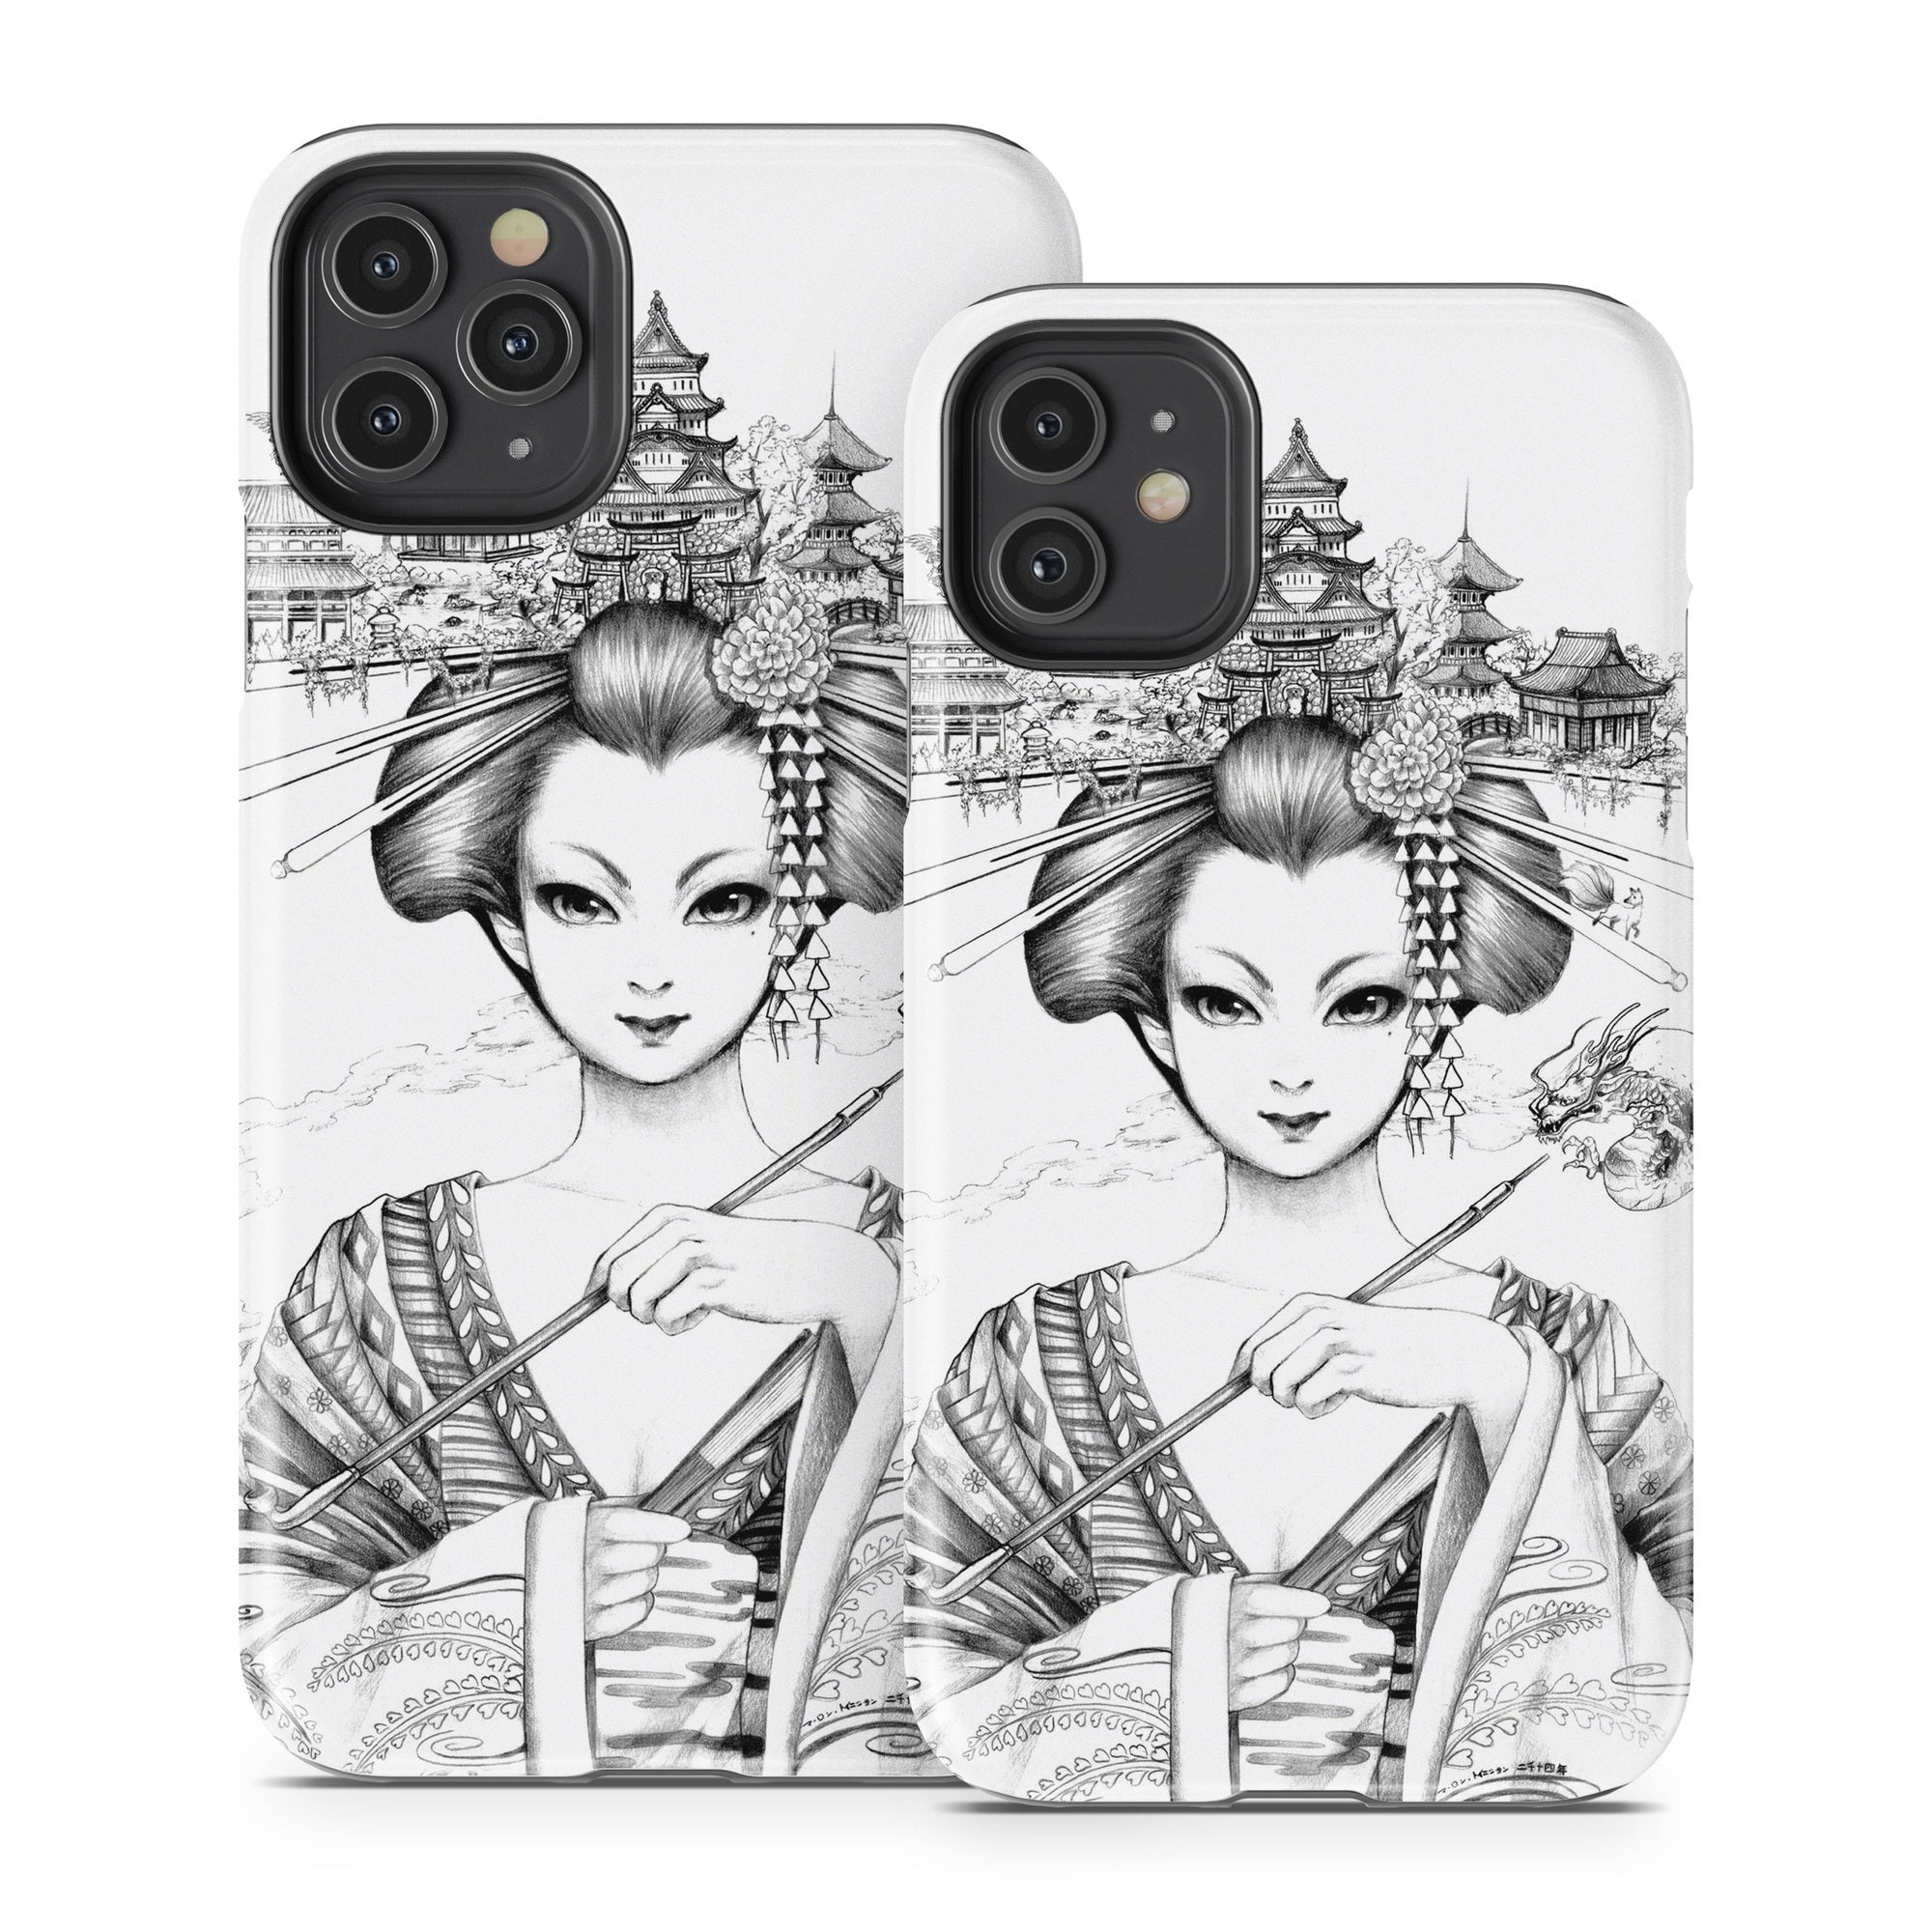 Geisha Sketch - Apple iPhone 11 Tough Case